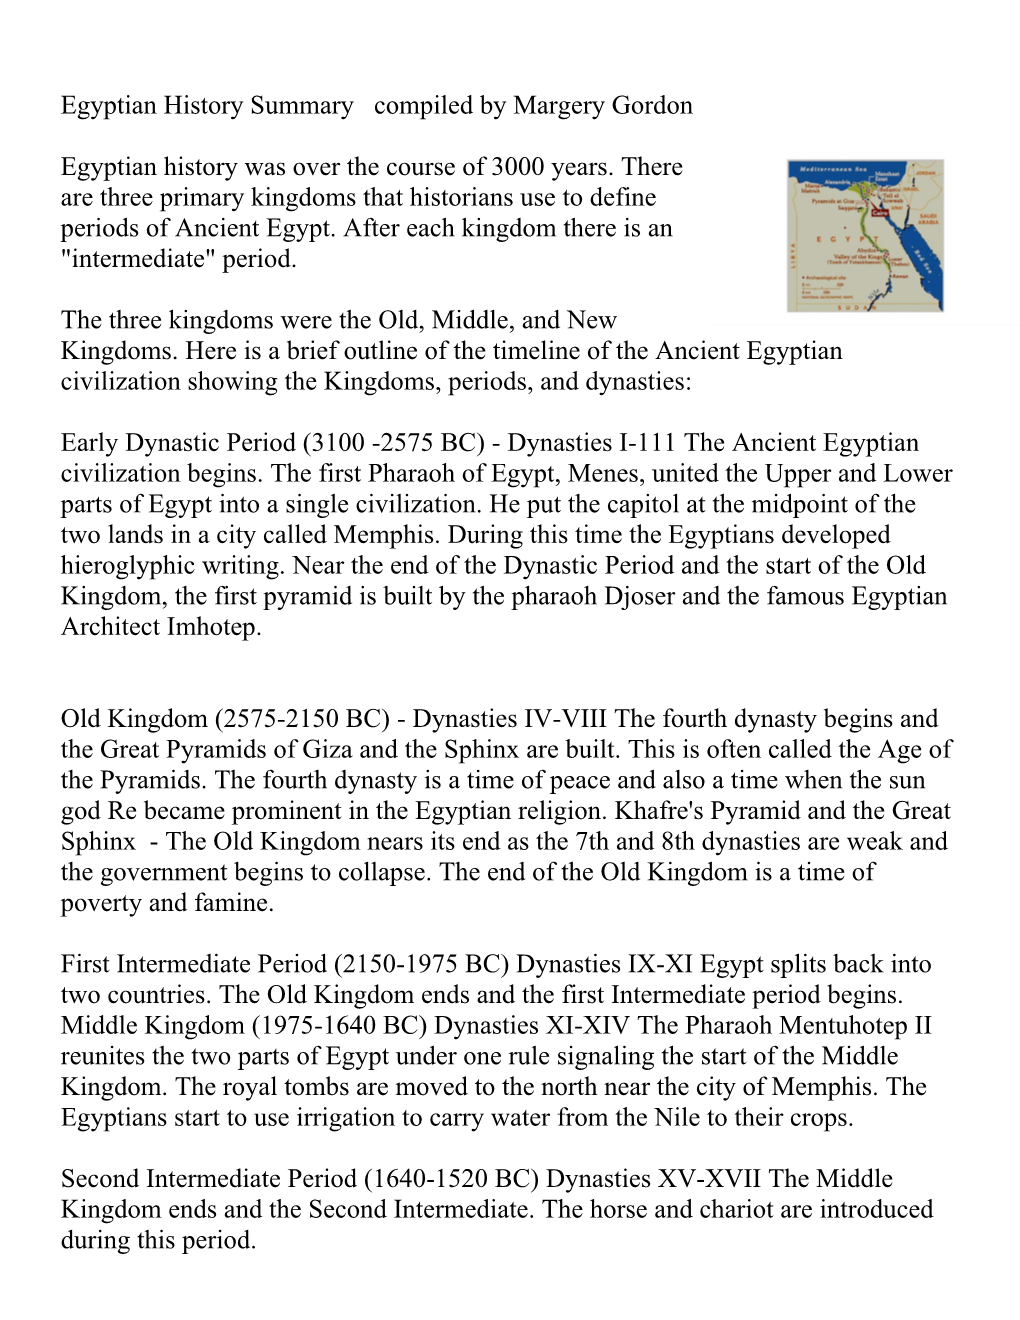 Egypt Time Line.Docx